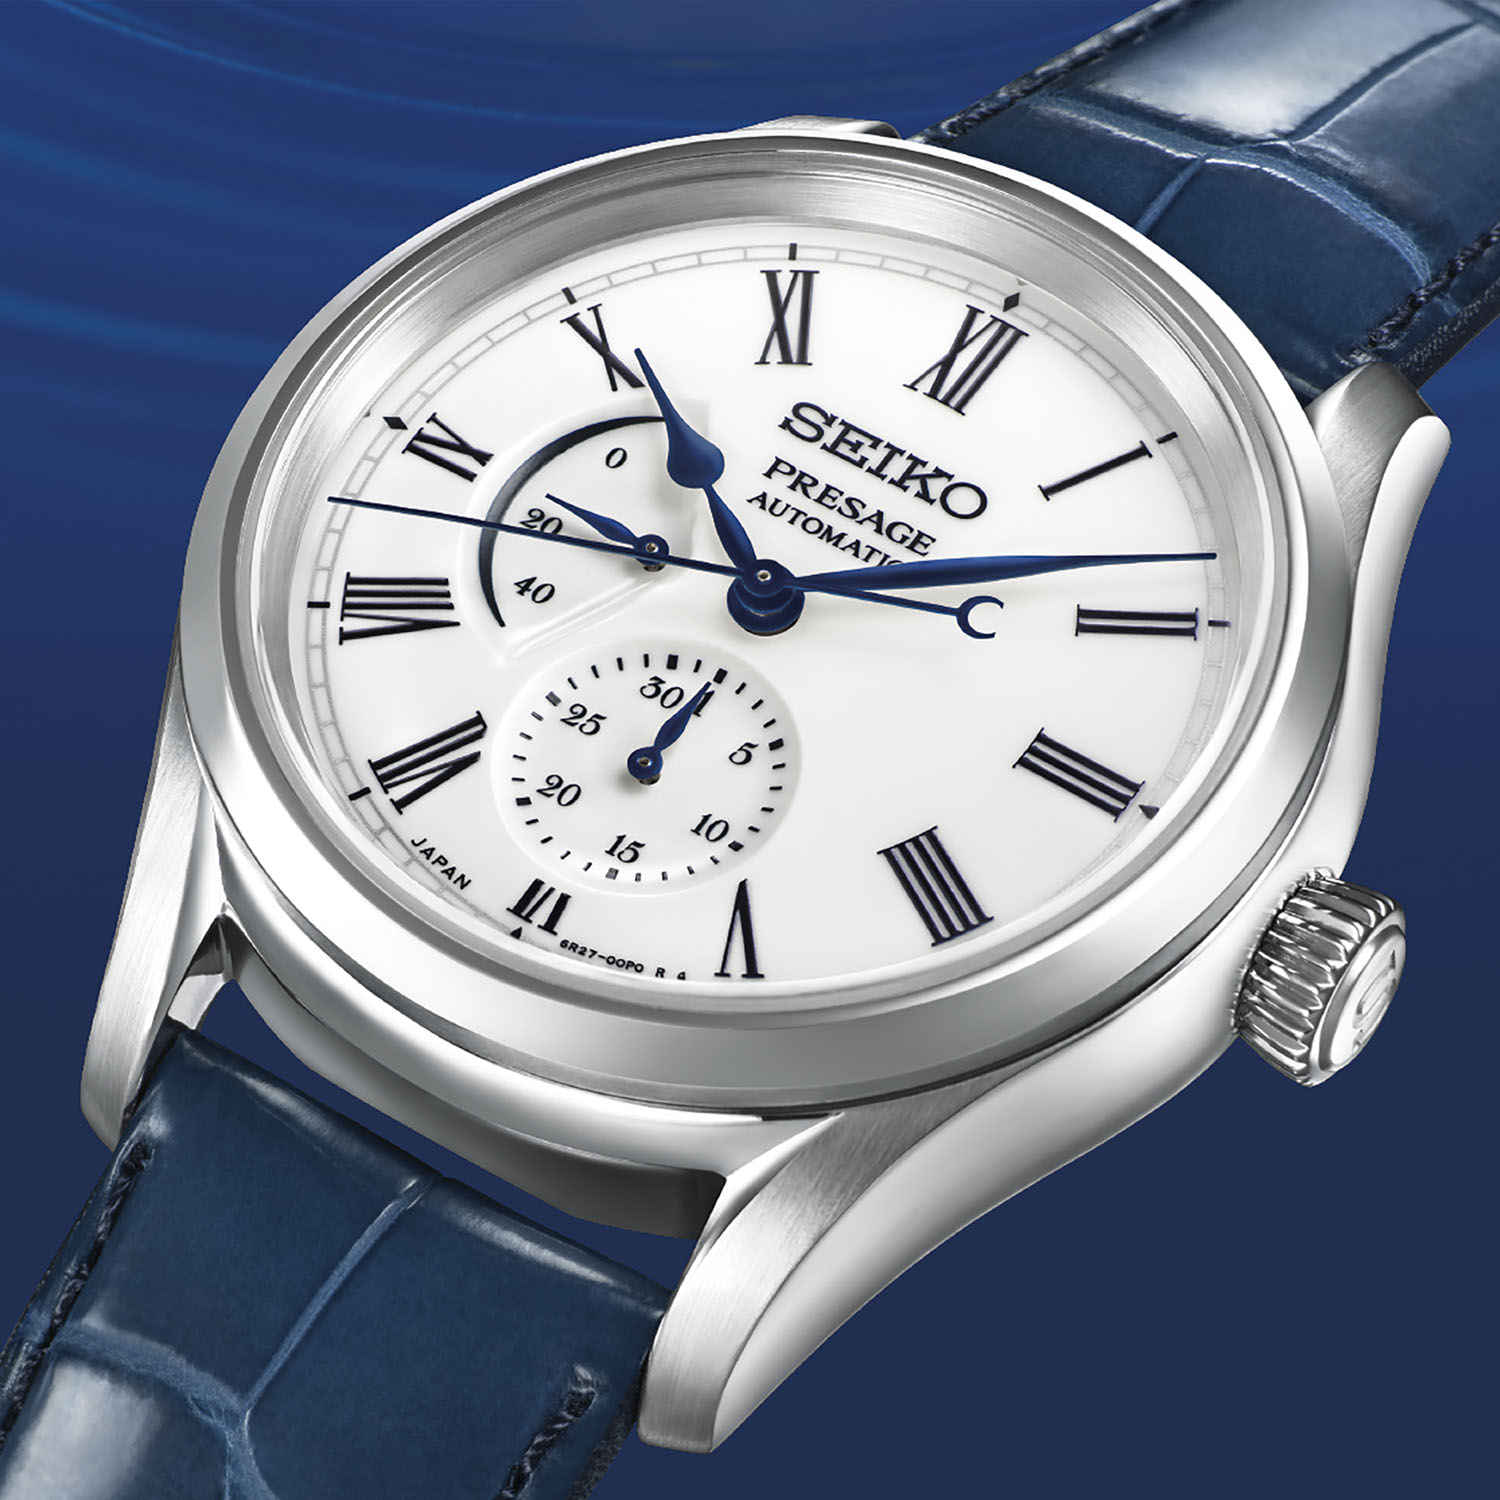 Introducing Seiko Presage Arita Porcelain Dial Limited Edition SPB171 Watch